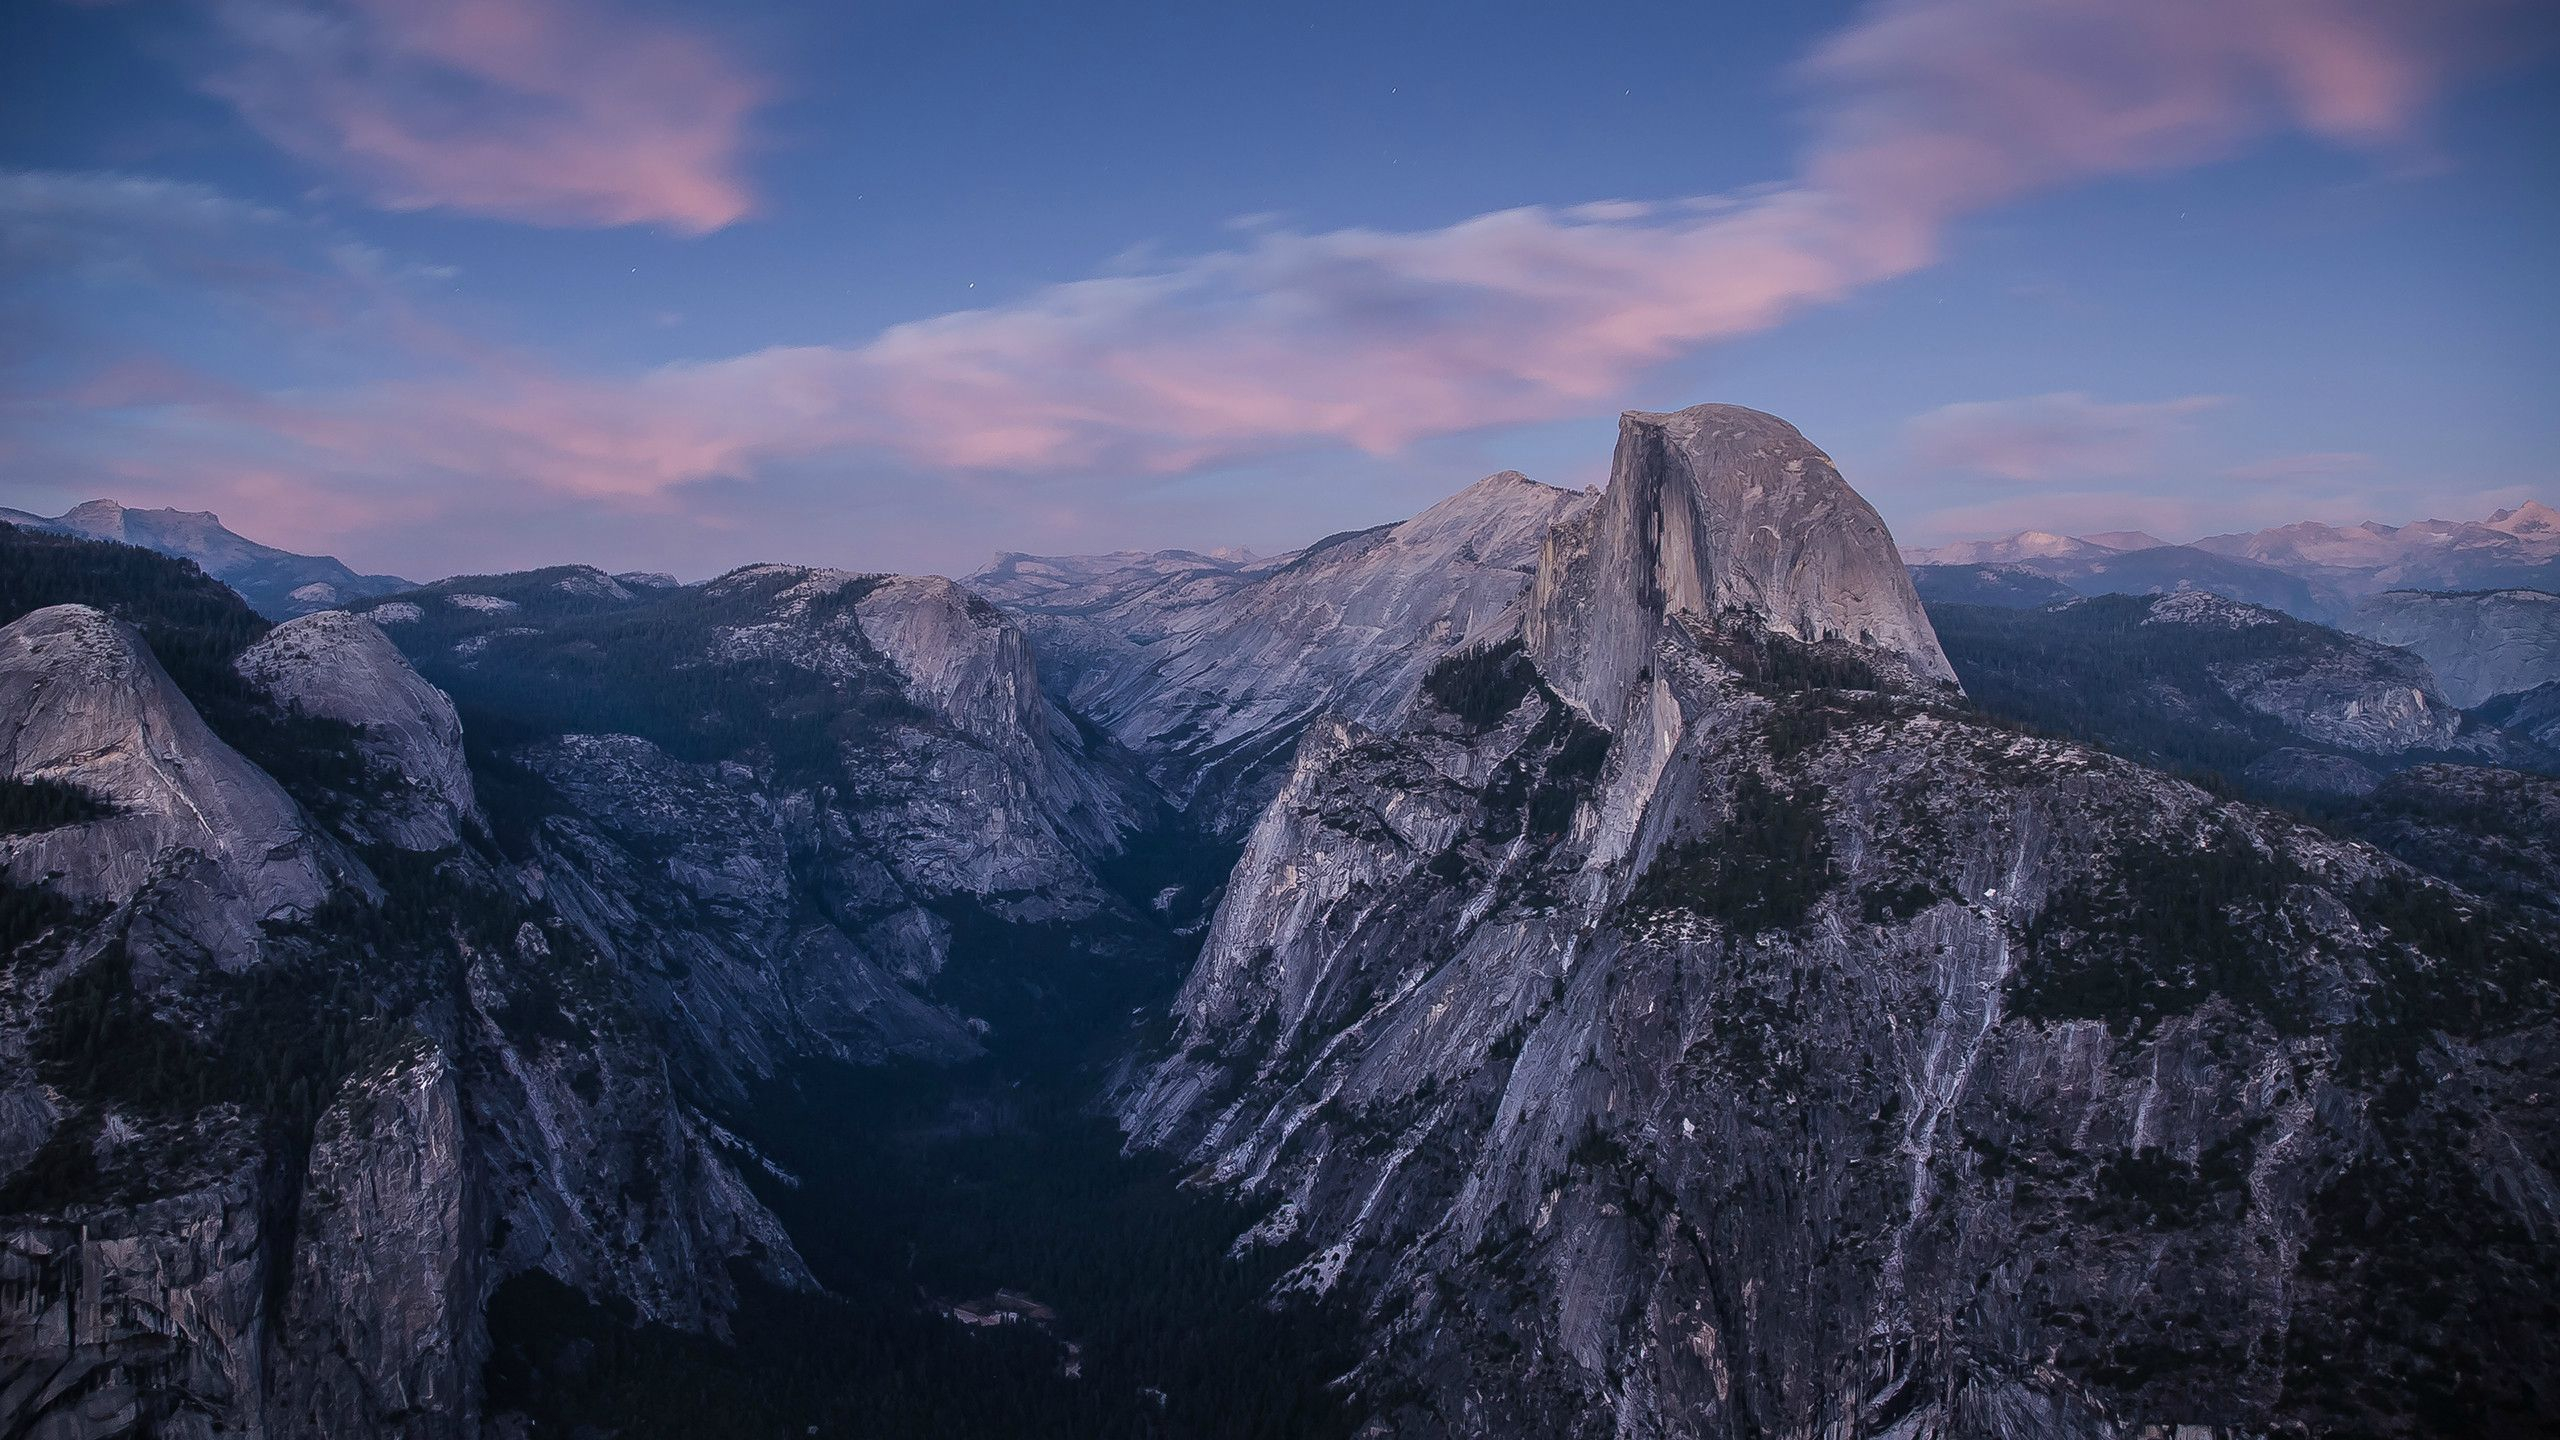 2560x1440 575 Wallpapers (All 1080p, No watermarks) | Yosemite wallpaper, Nature wallpaper, Yosemite